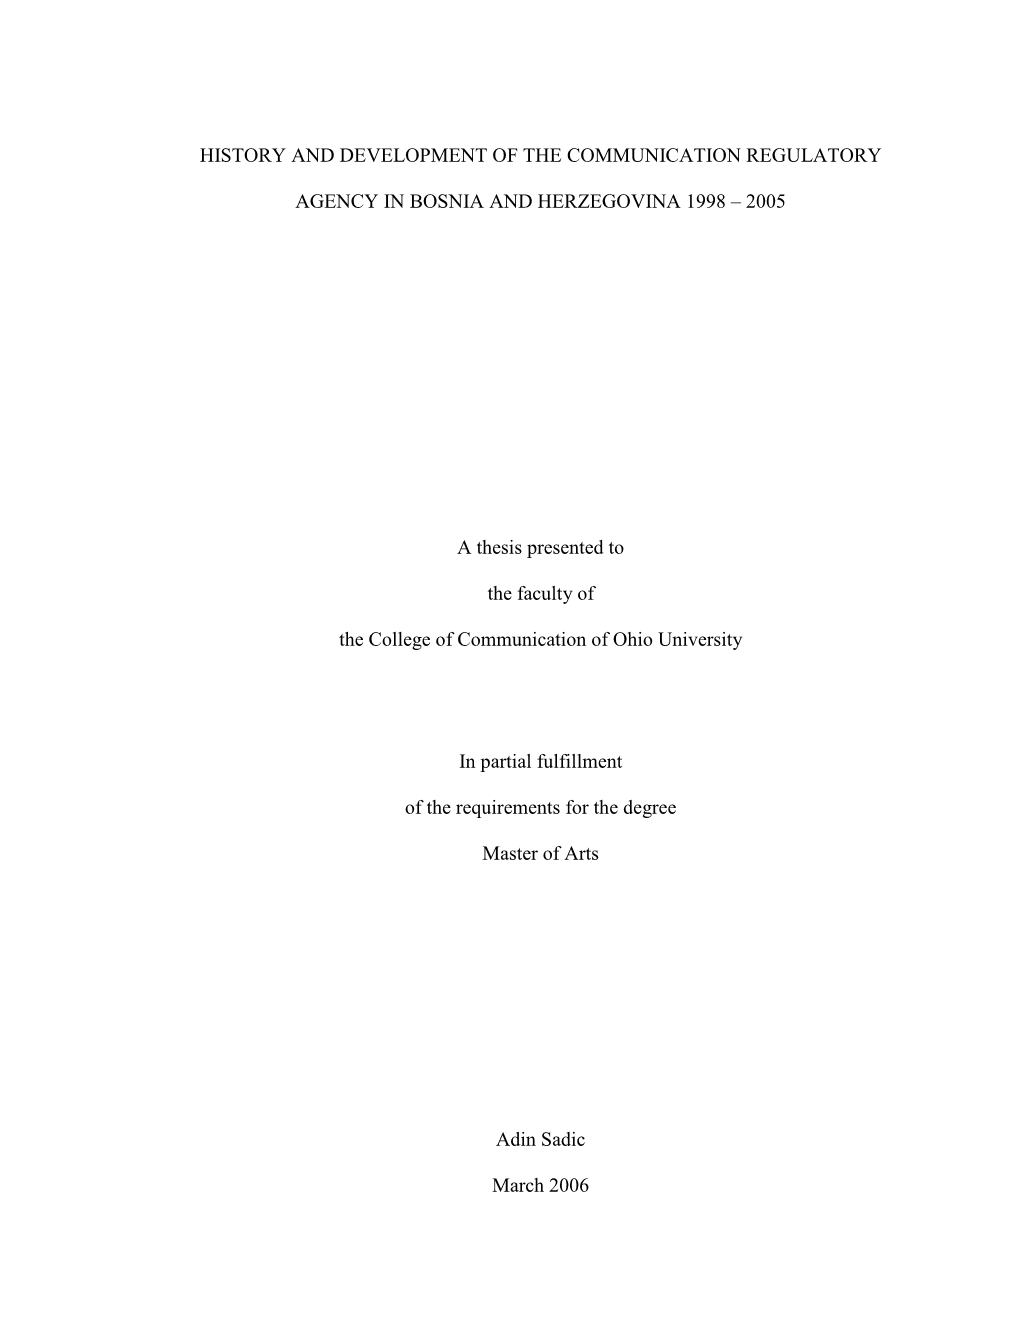 History and Development of the Communication Regulatory